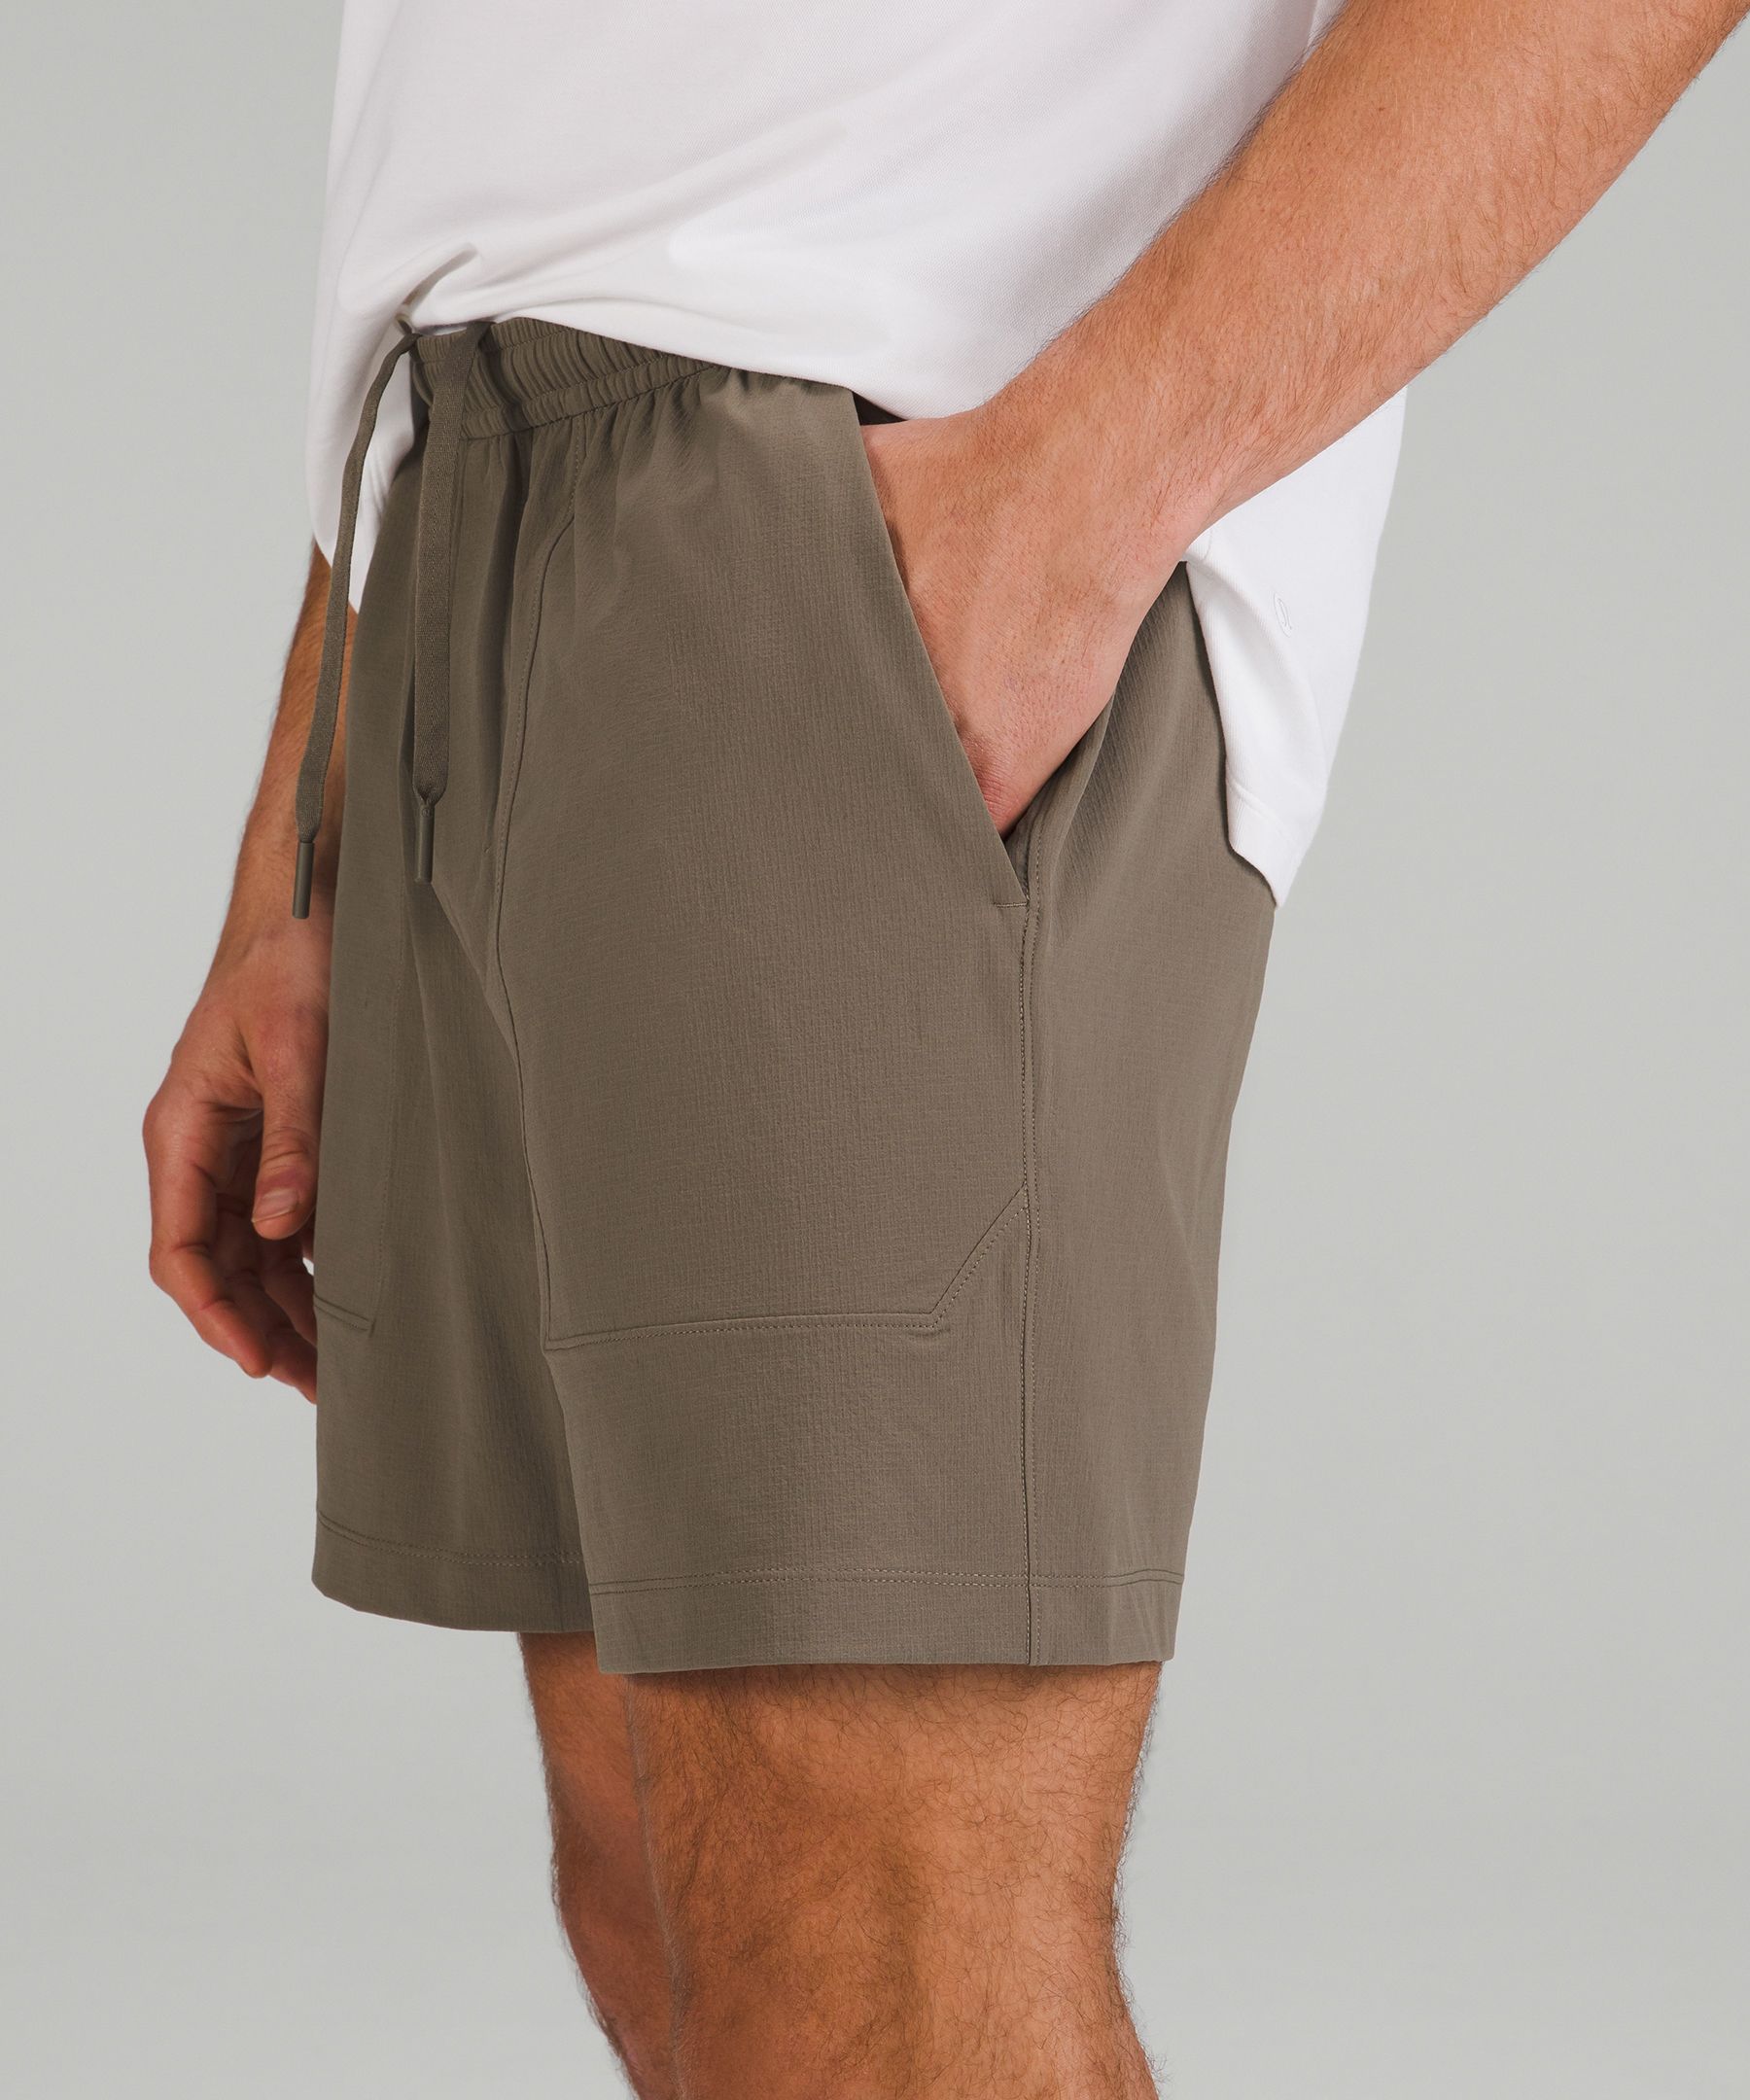 Bowline Short 5 *Stretch Ripstop, Men's Shorts